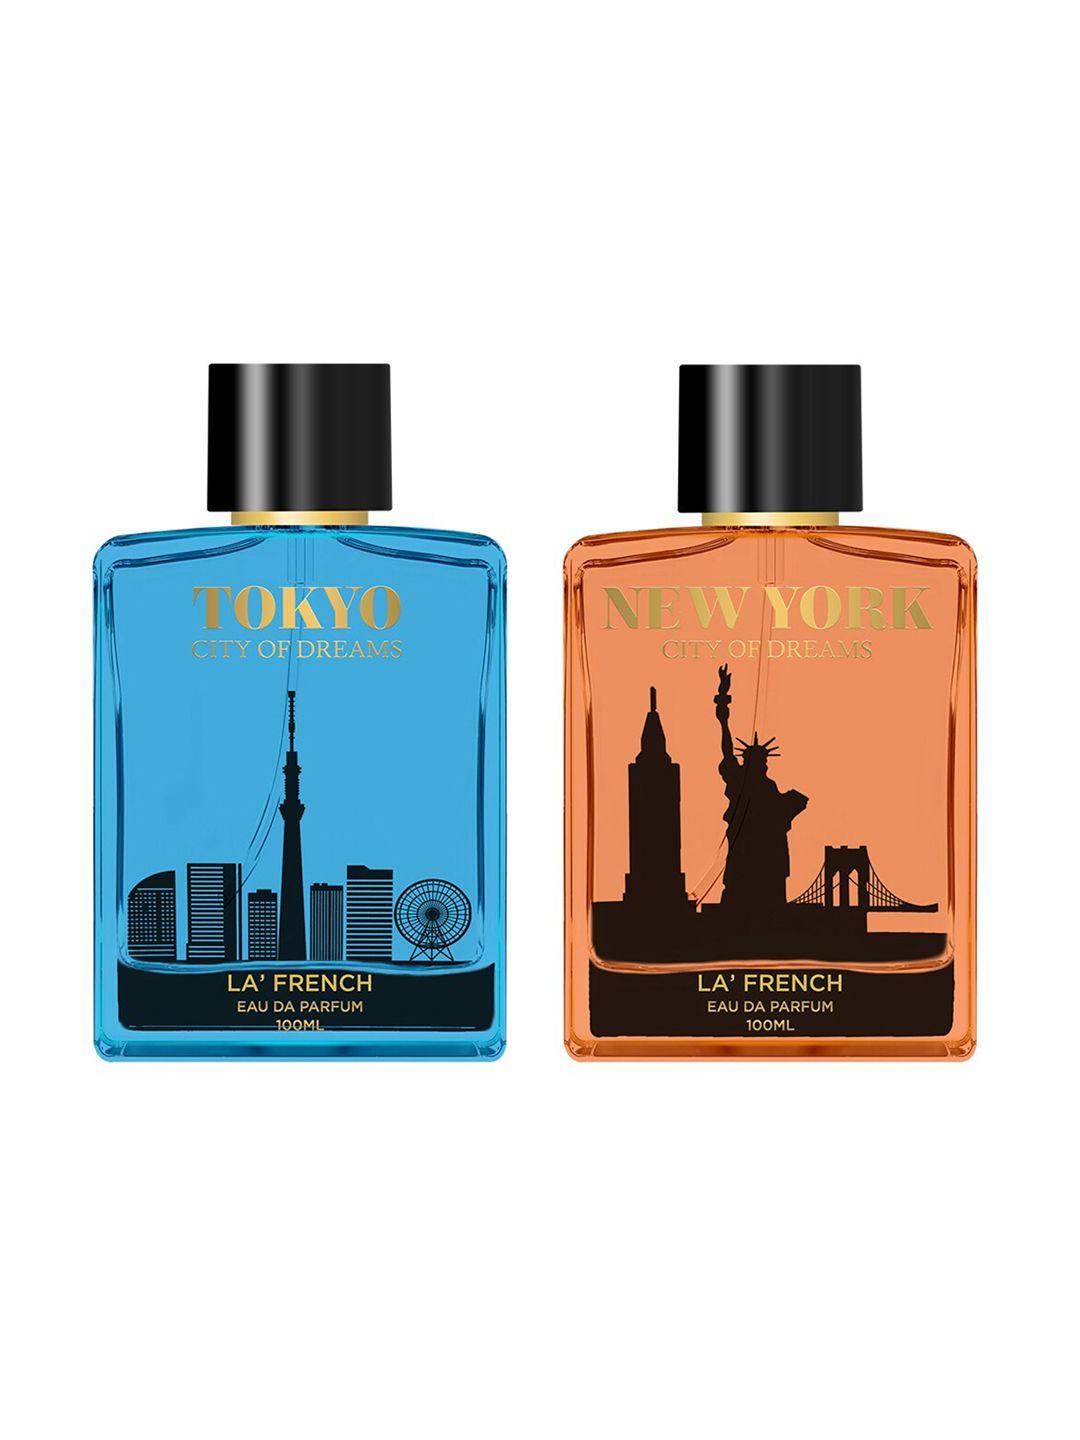 la french tokyo & new york long lasting eau de parfum - 100ml each